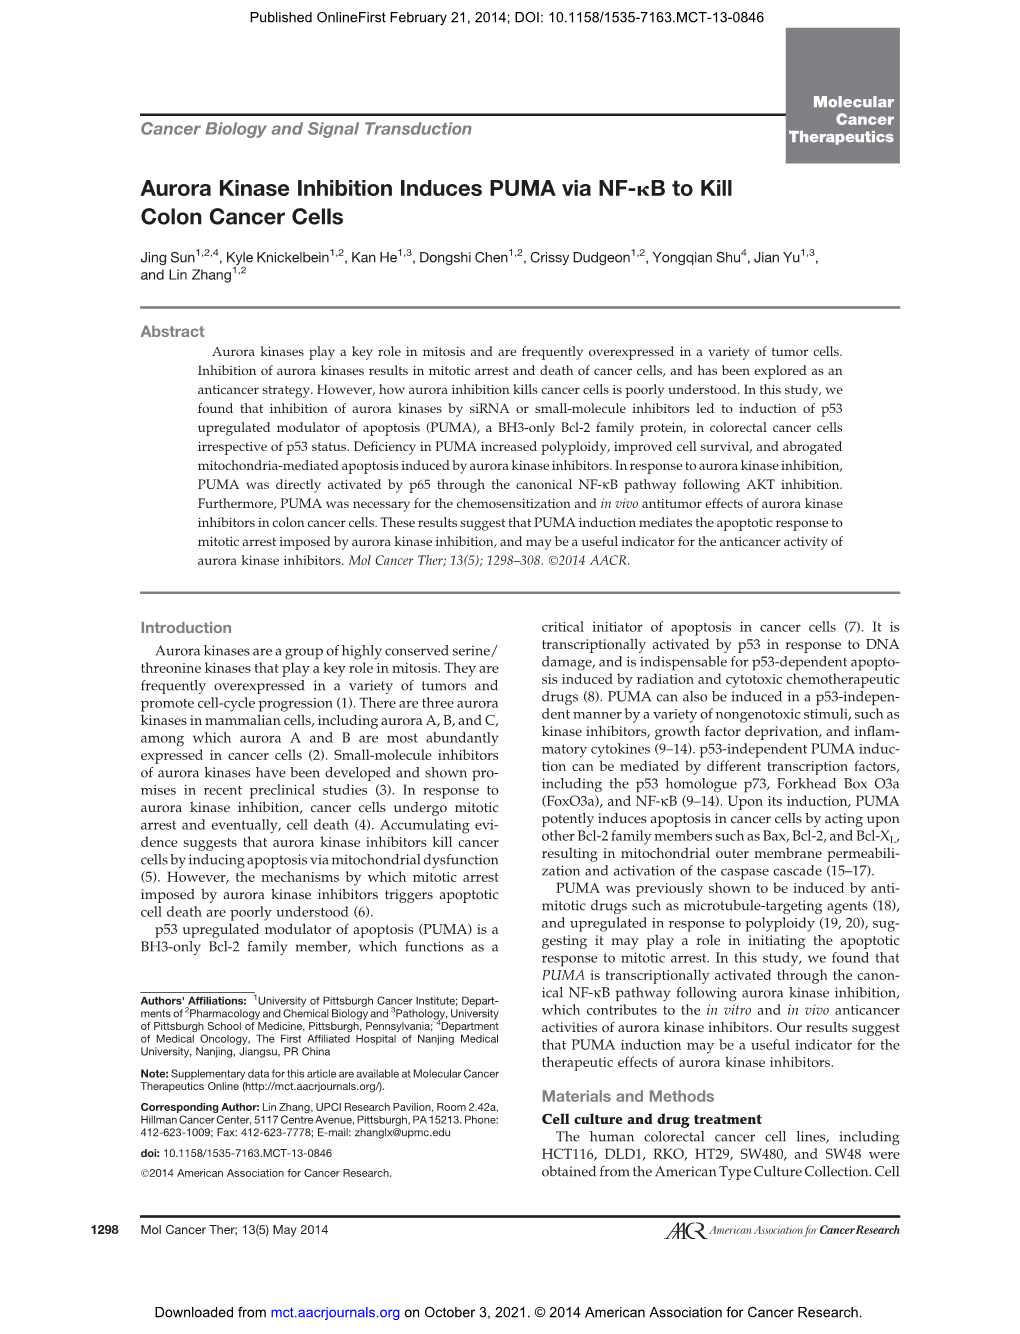 Aurora Kinase Inhibition Induces PUMA Via NF-Kb to Kill Colon Cancer Cells